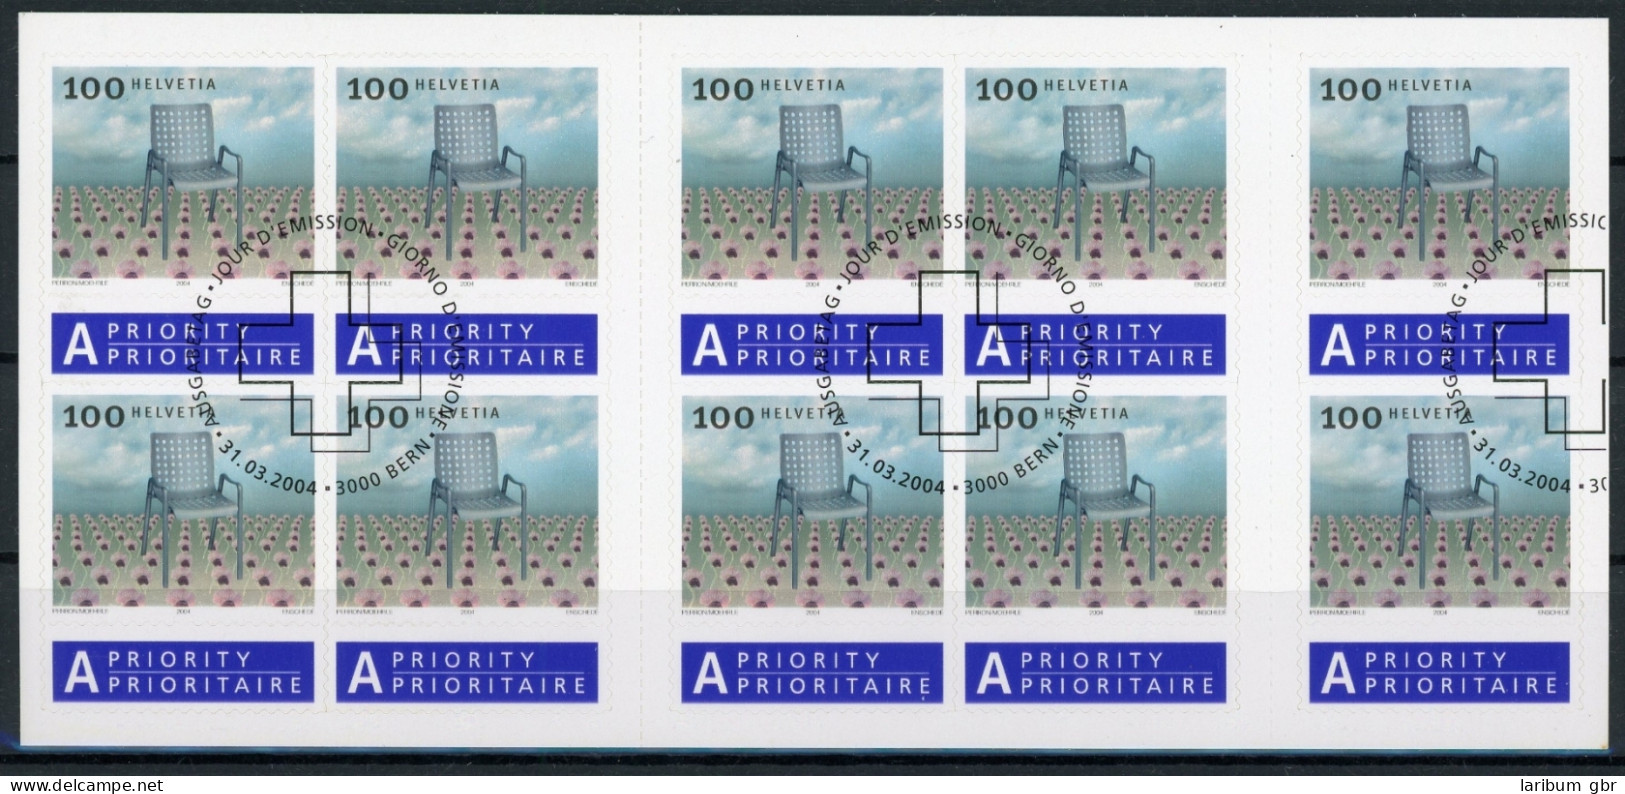 Schweiz Markenheftchen 0-137 Design Ersttagssonderstempel #IA050 - Postzegelboekjes